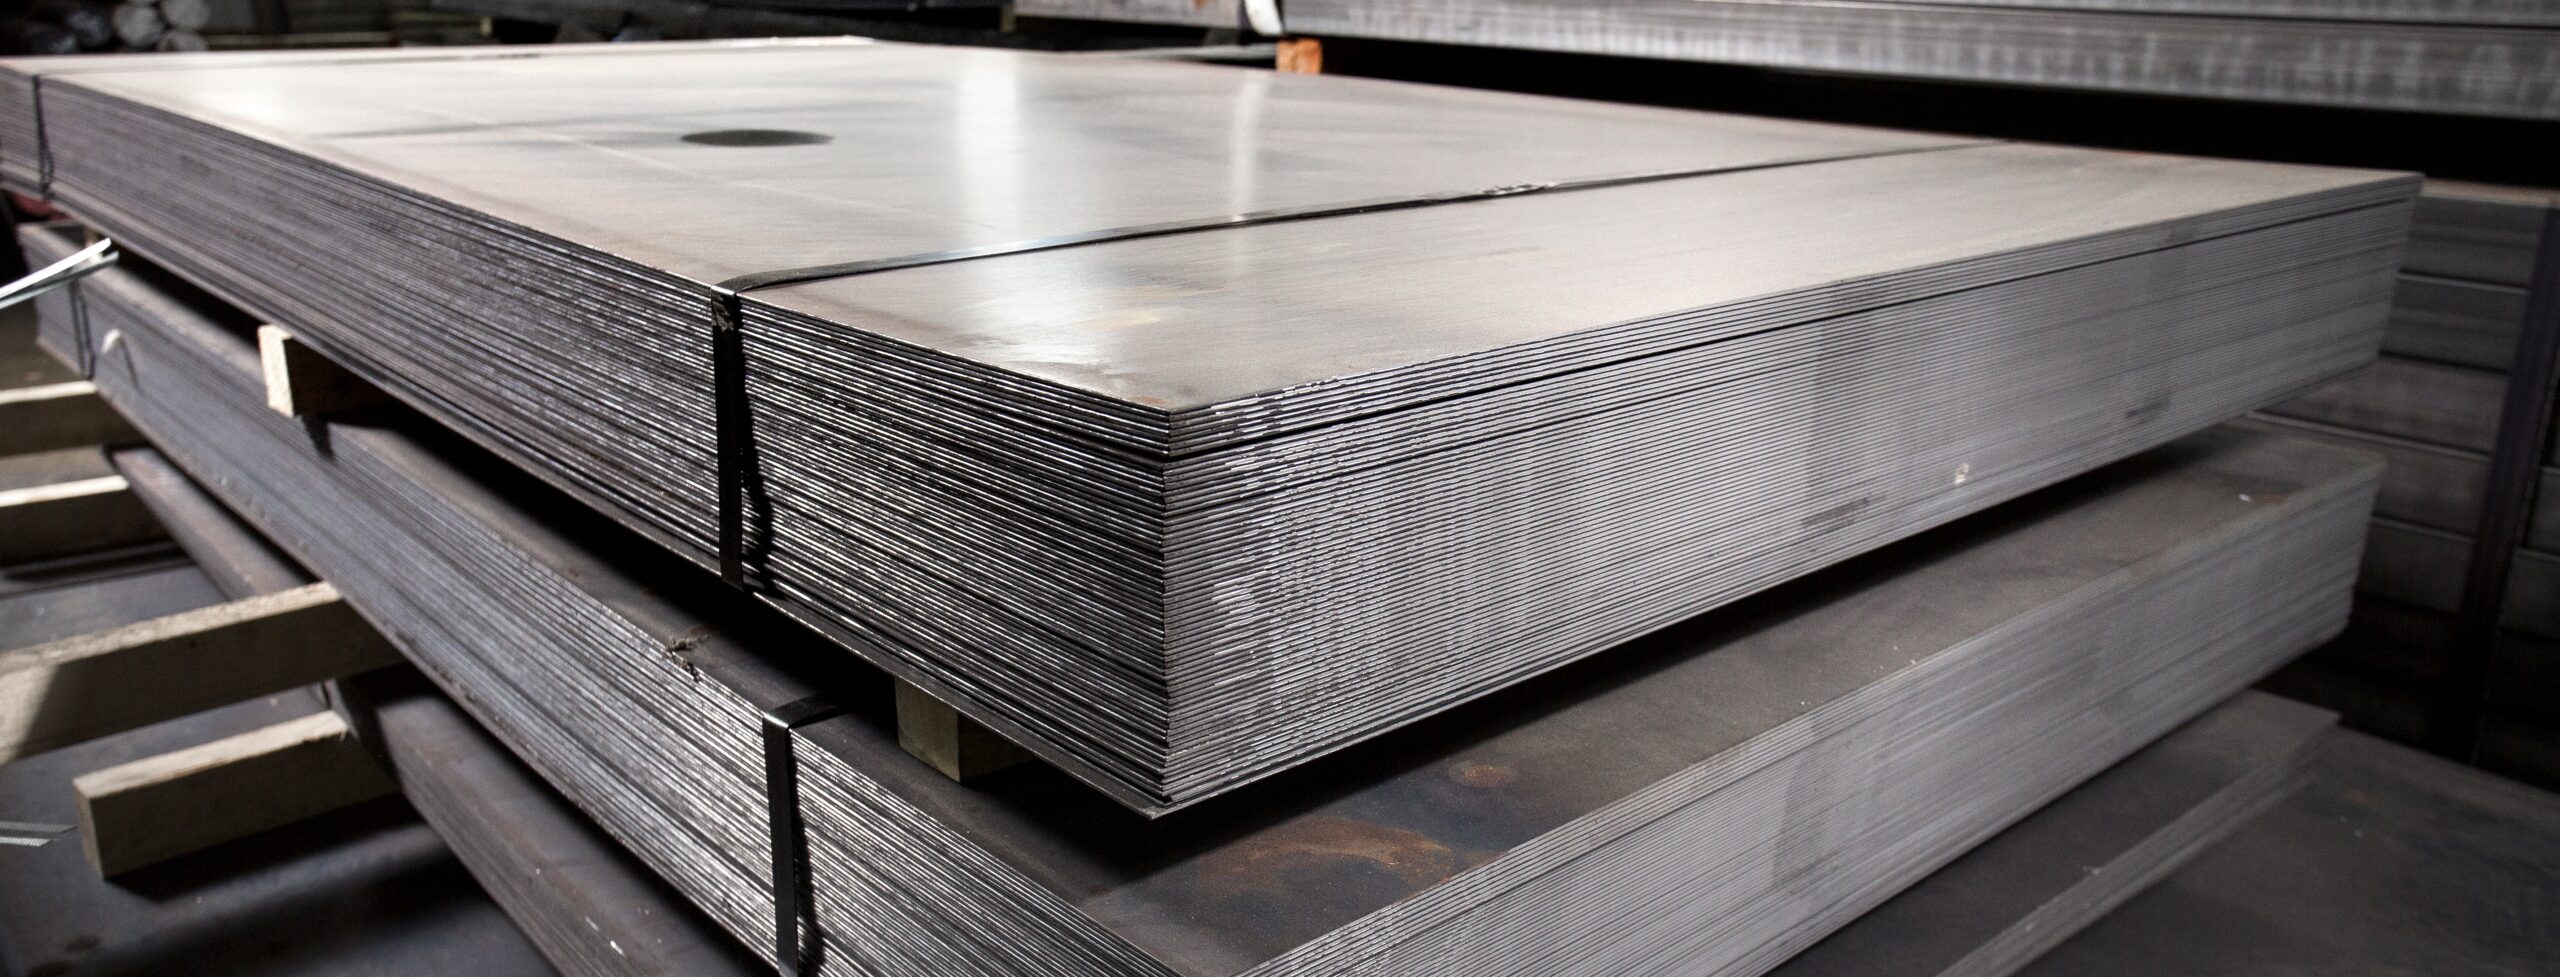 Stainless steel metal sheets deposited in stacks